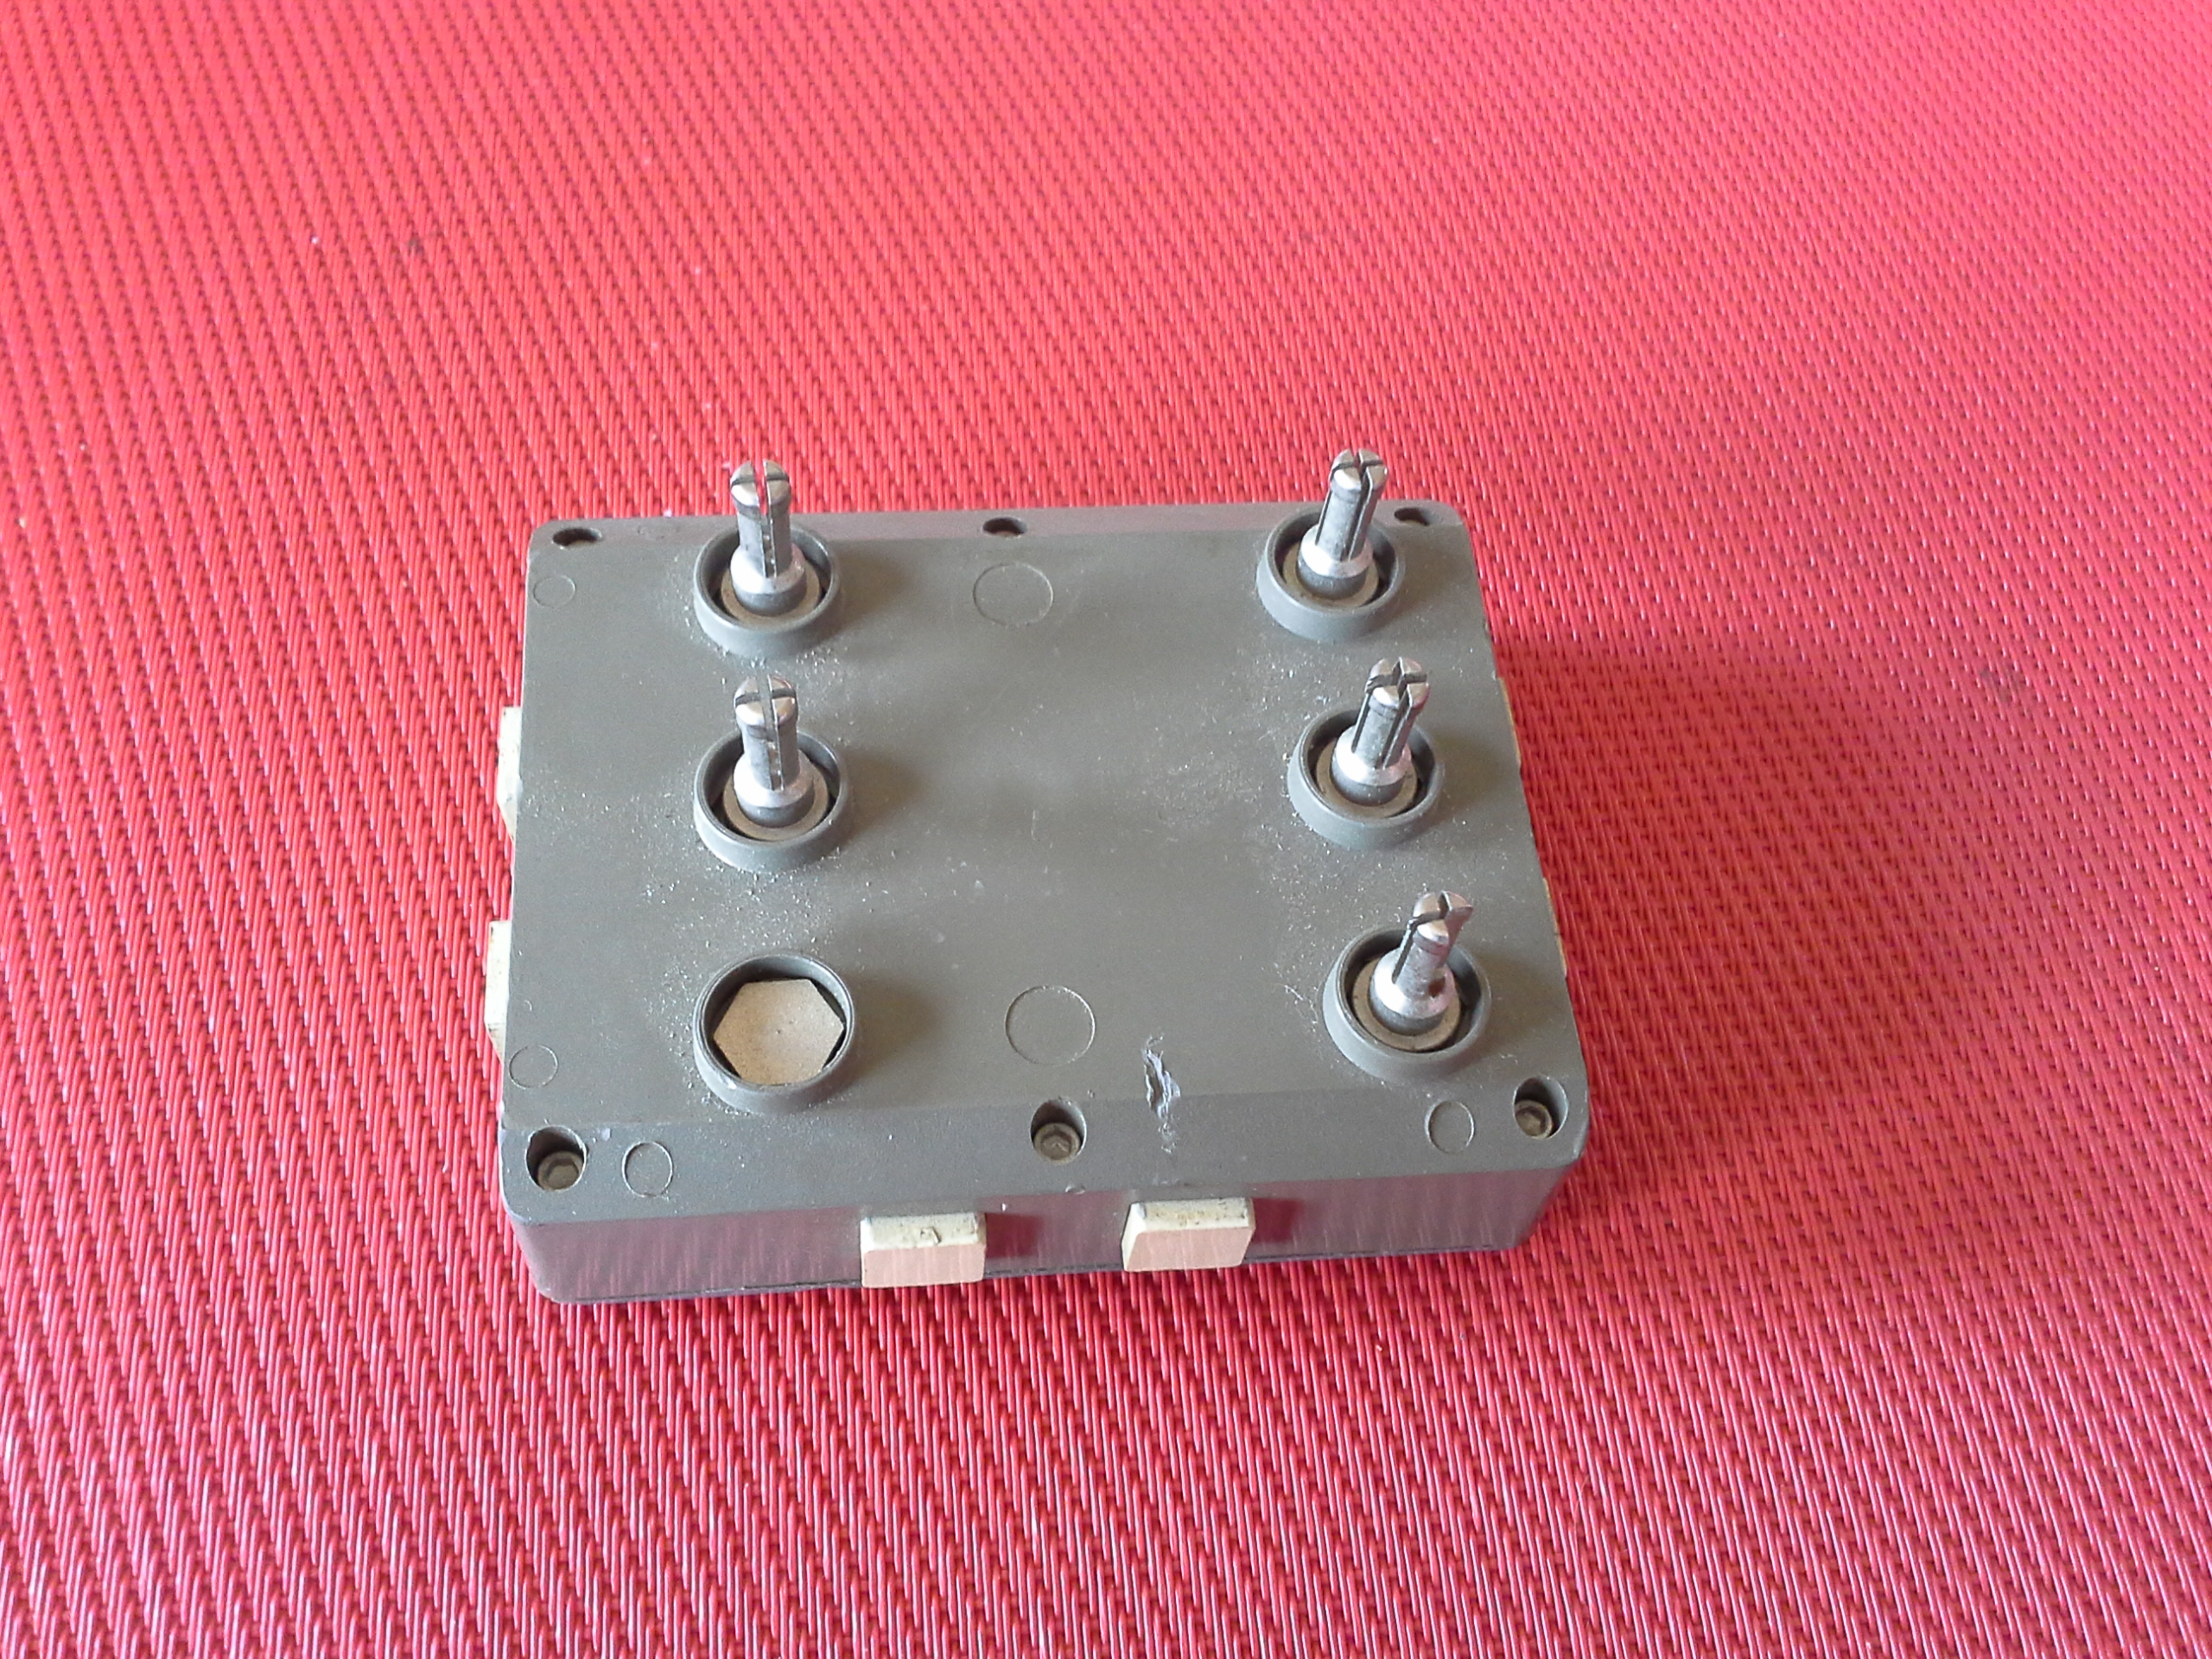 Tektronix Curve Tracer Transistor Adapter 013-0098-02